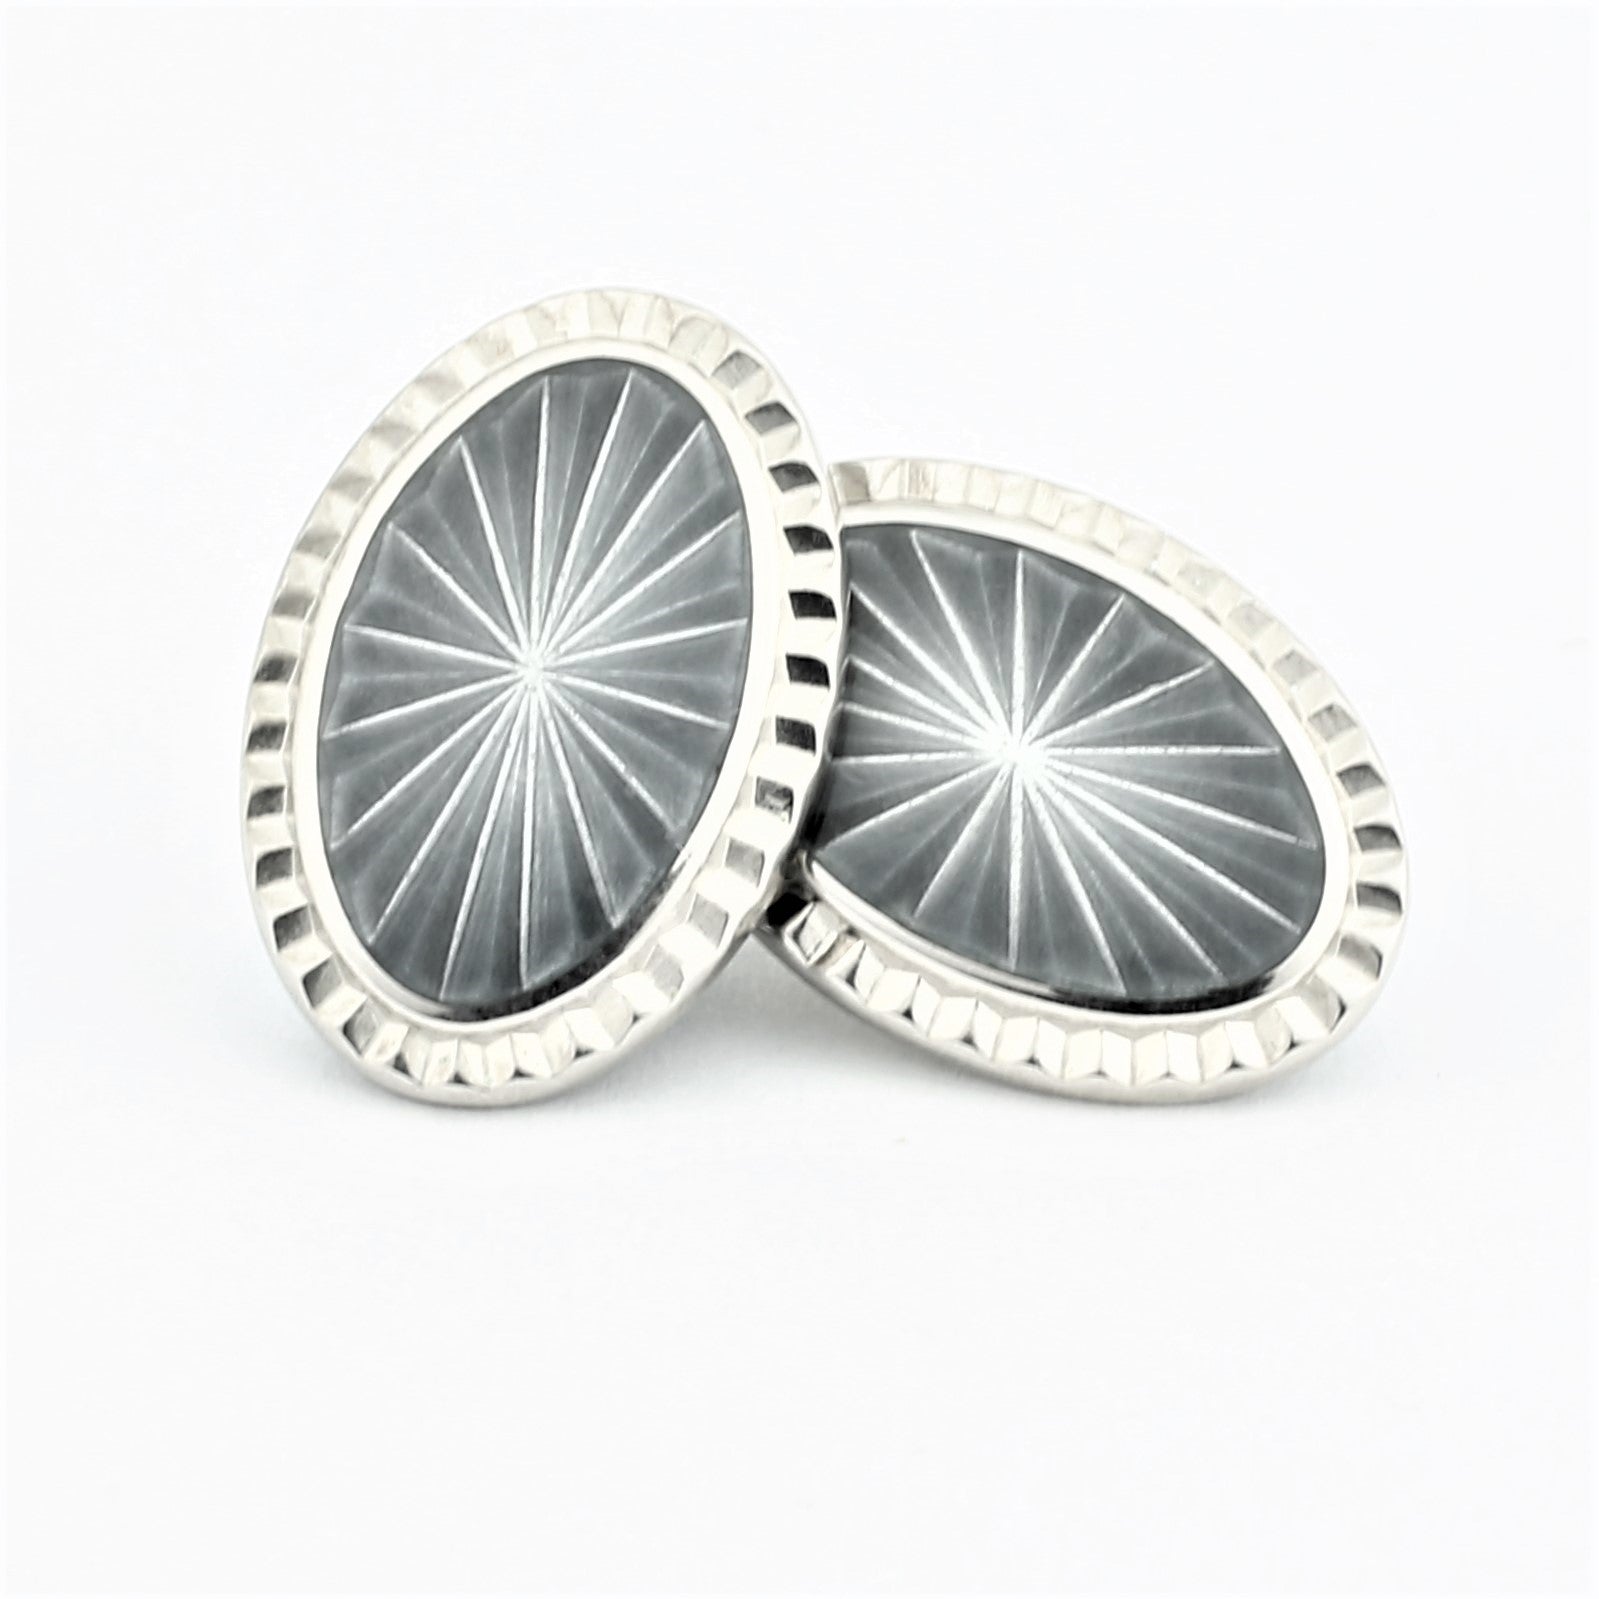 Prism cufflinks in grey enamel and silver